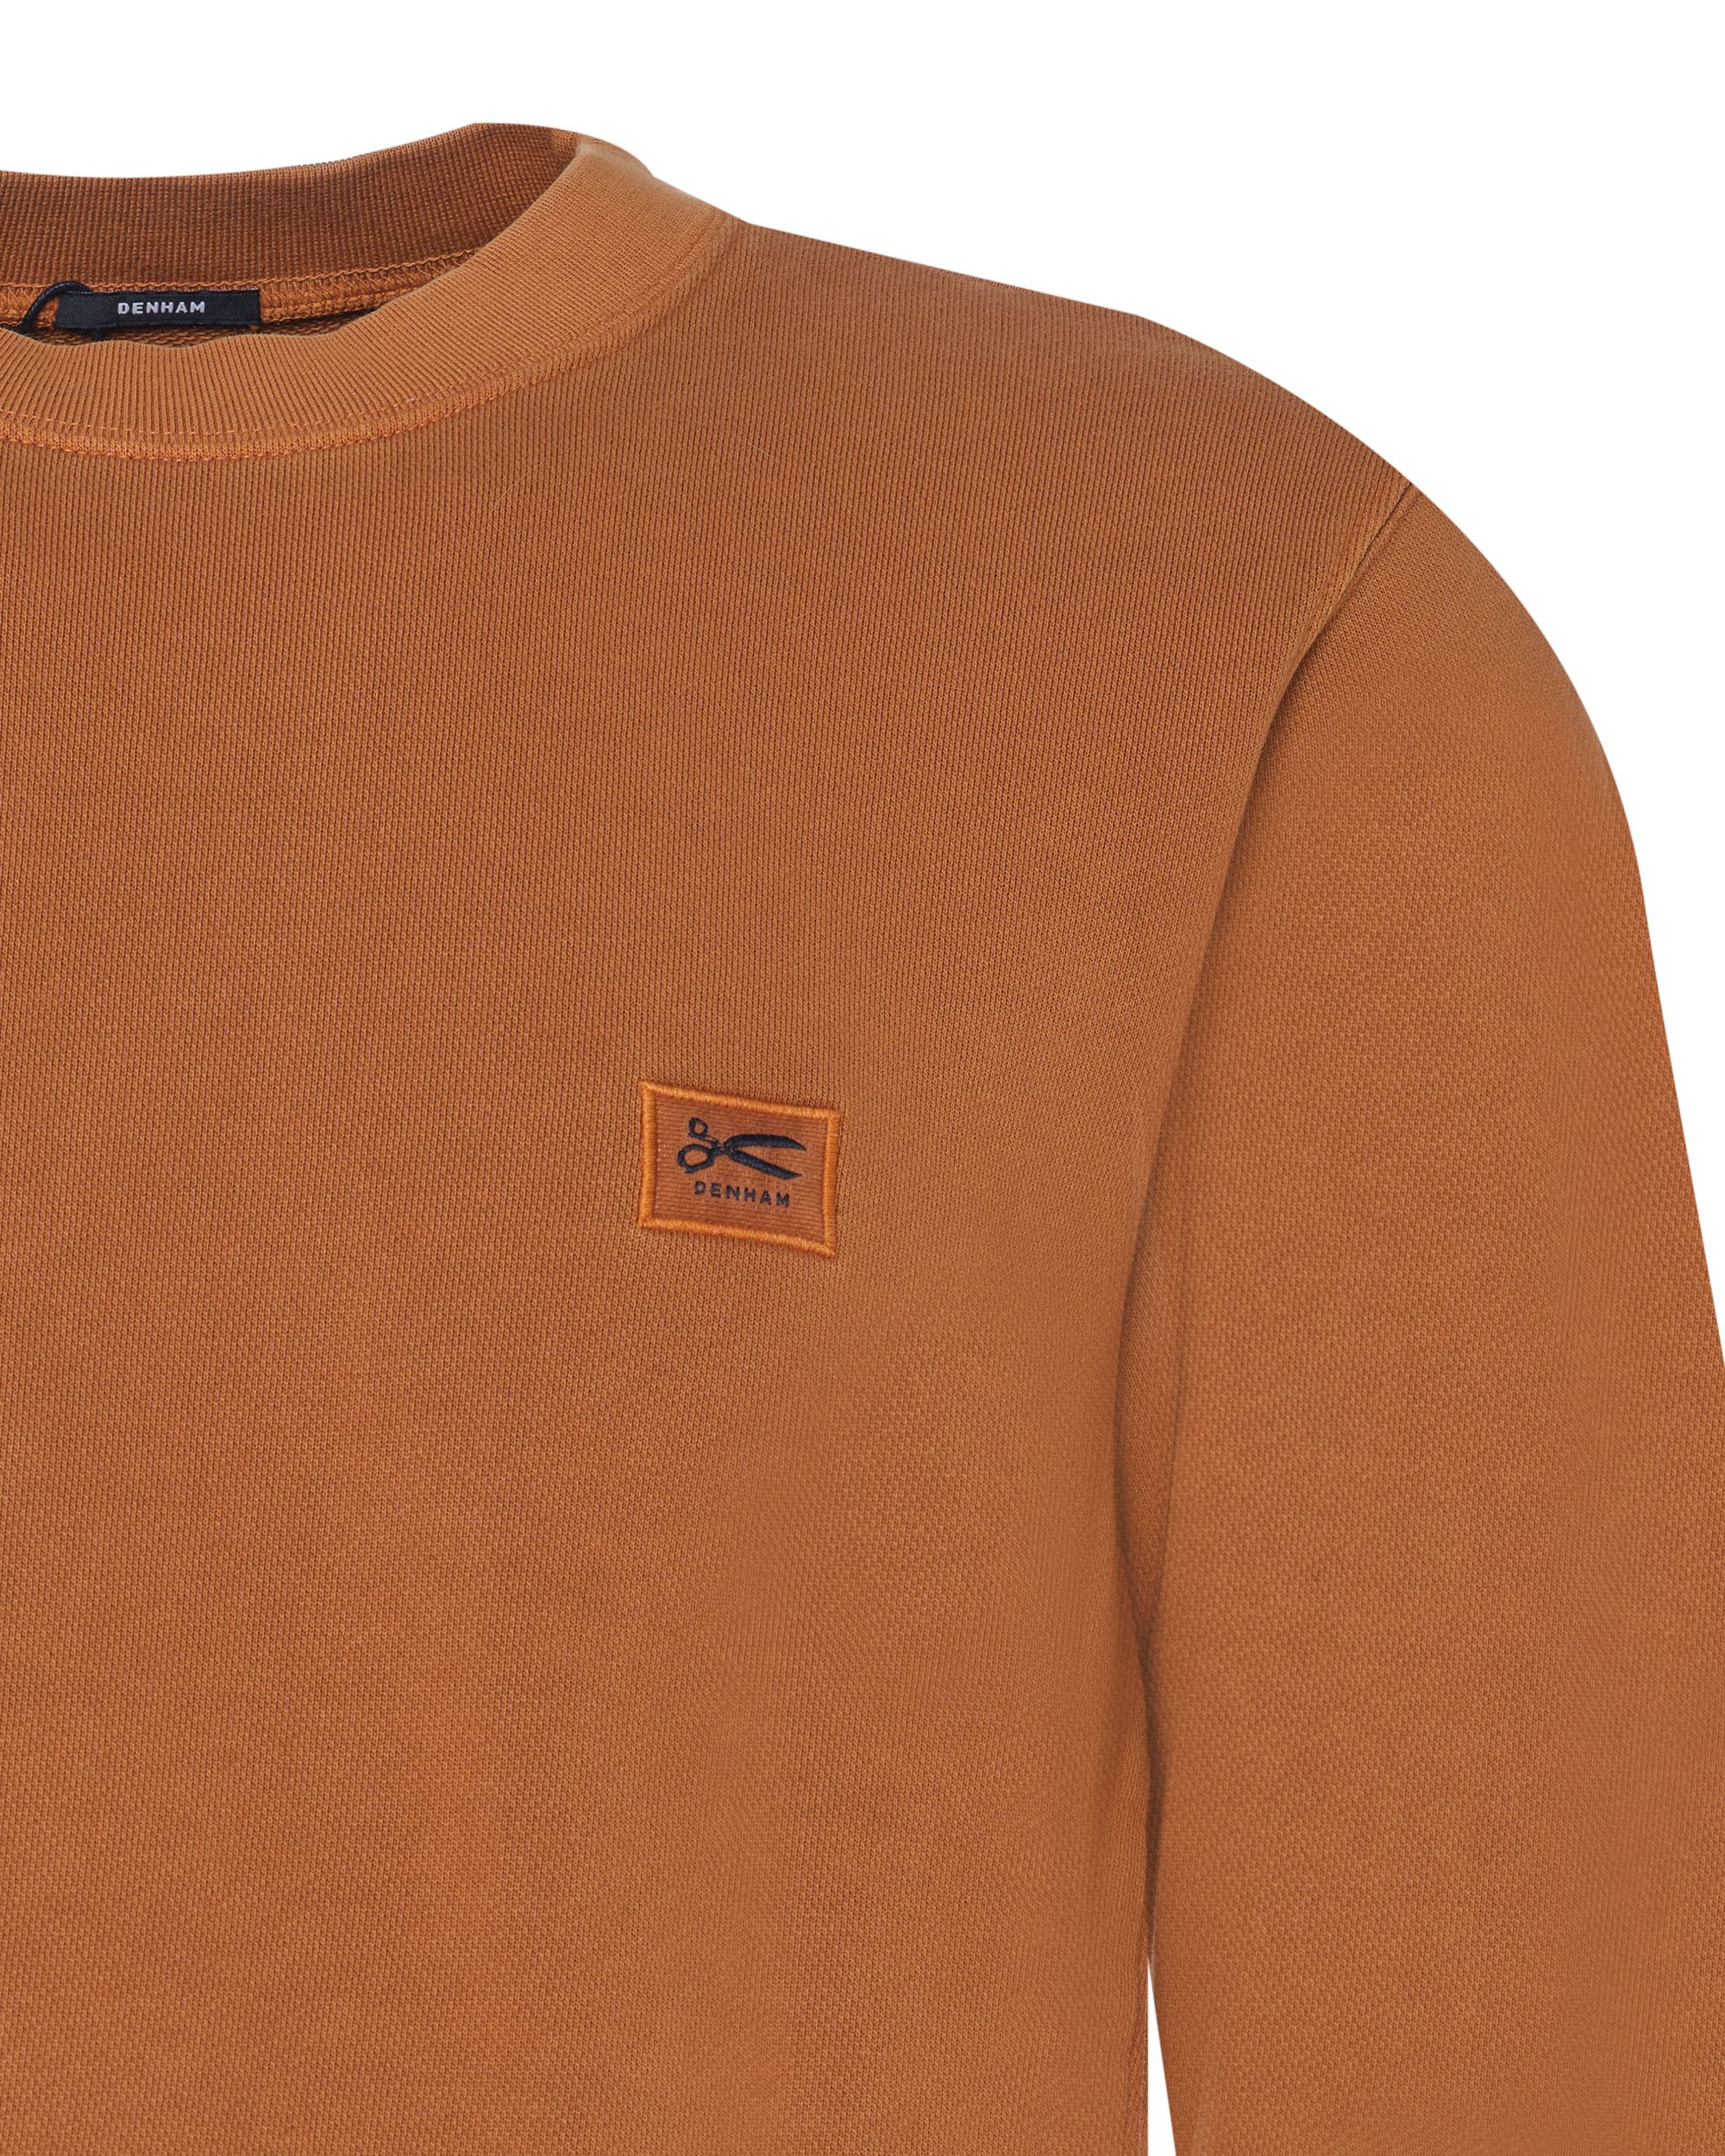 DENHAM Applique Sweater Camel 081324-001-L